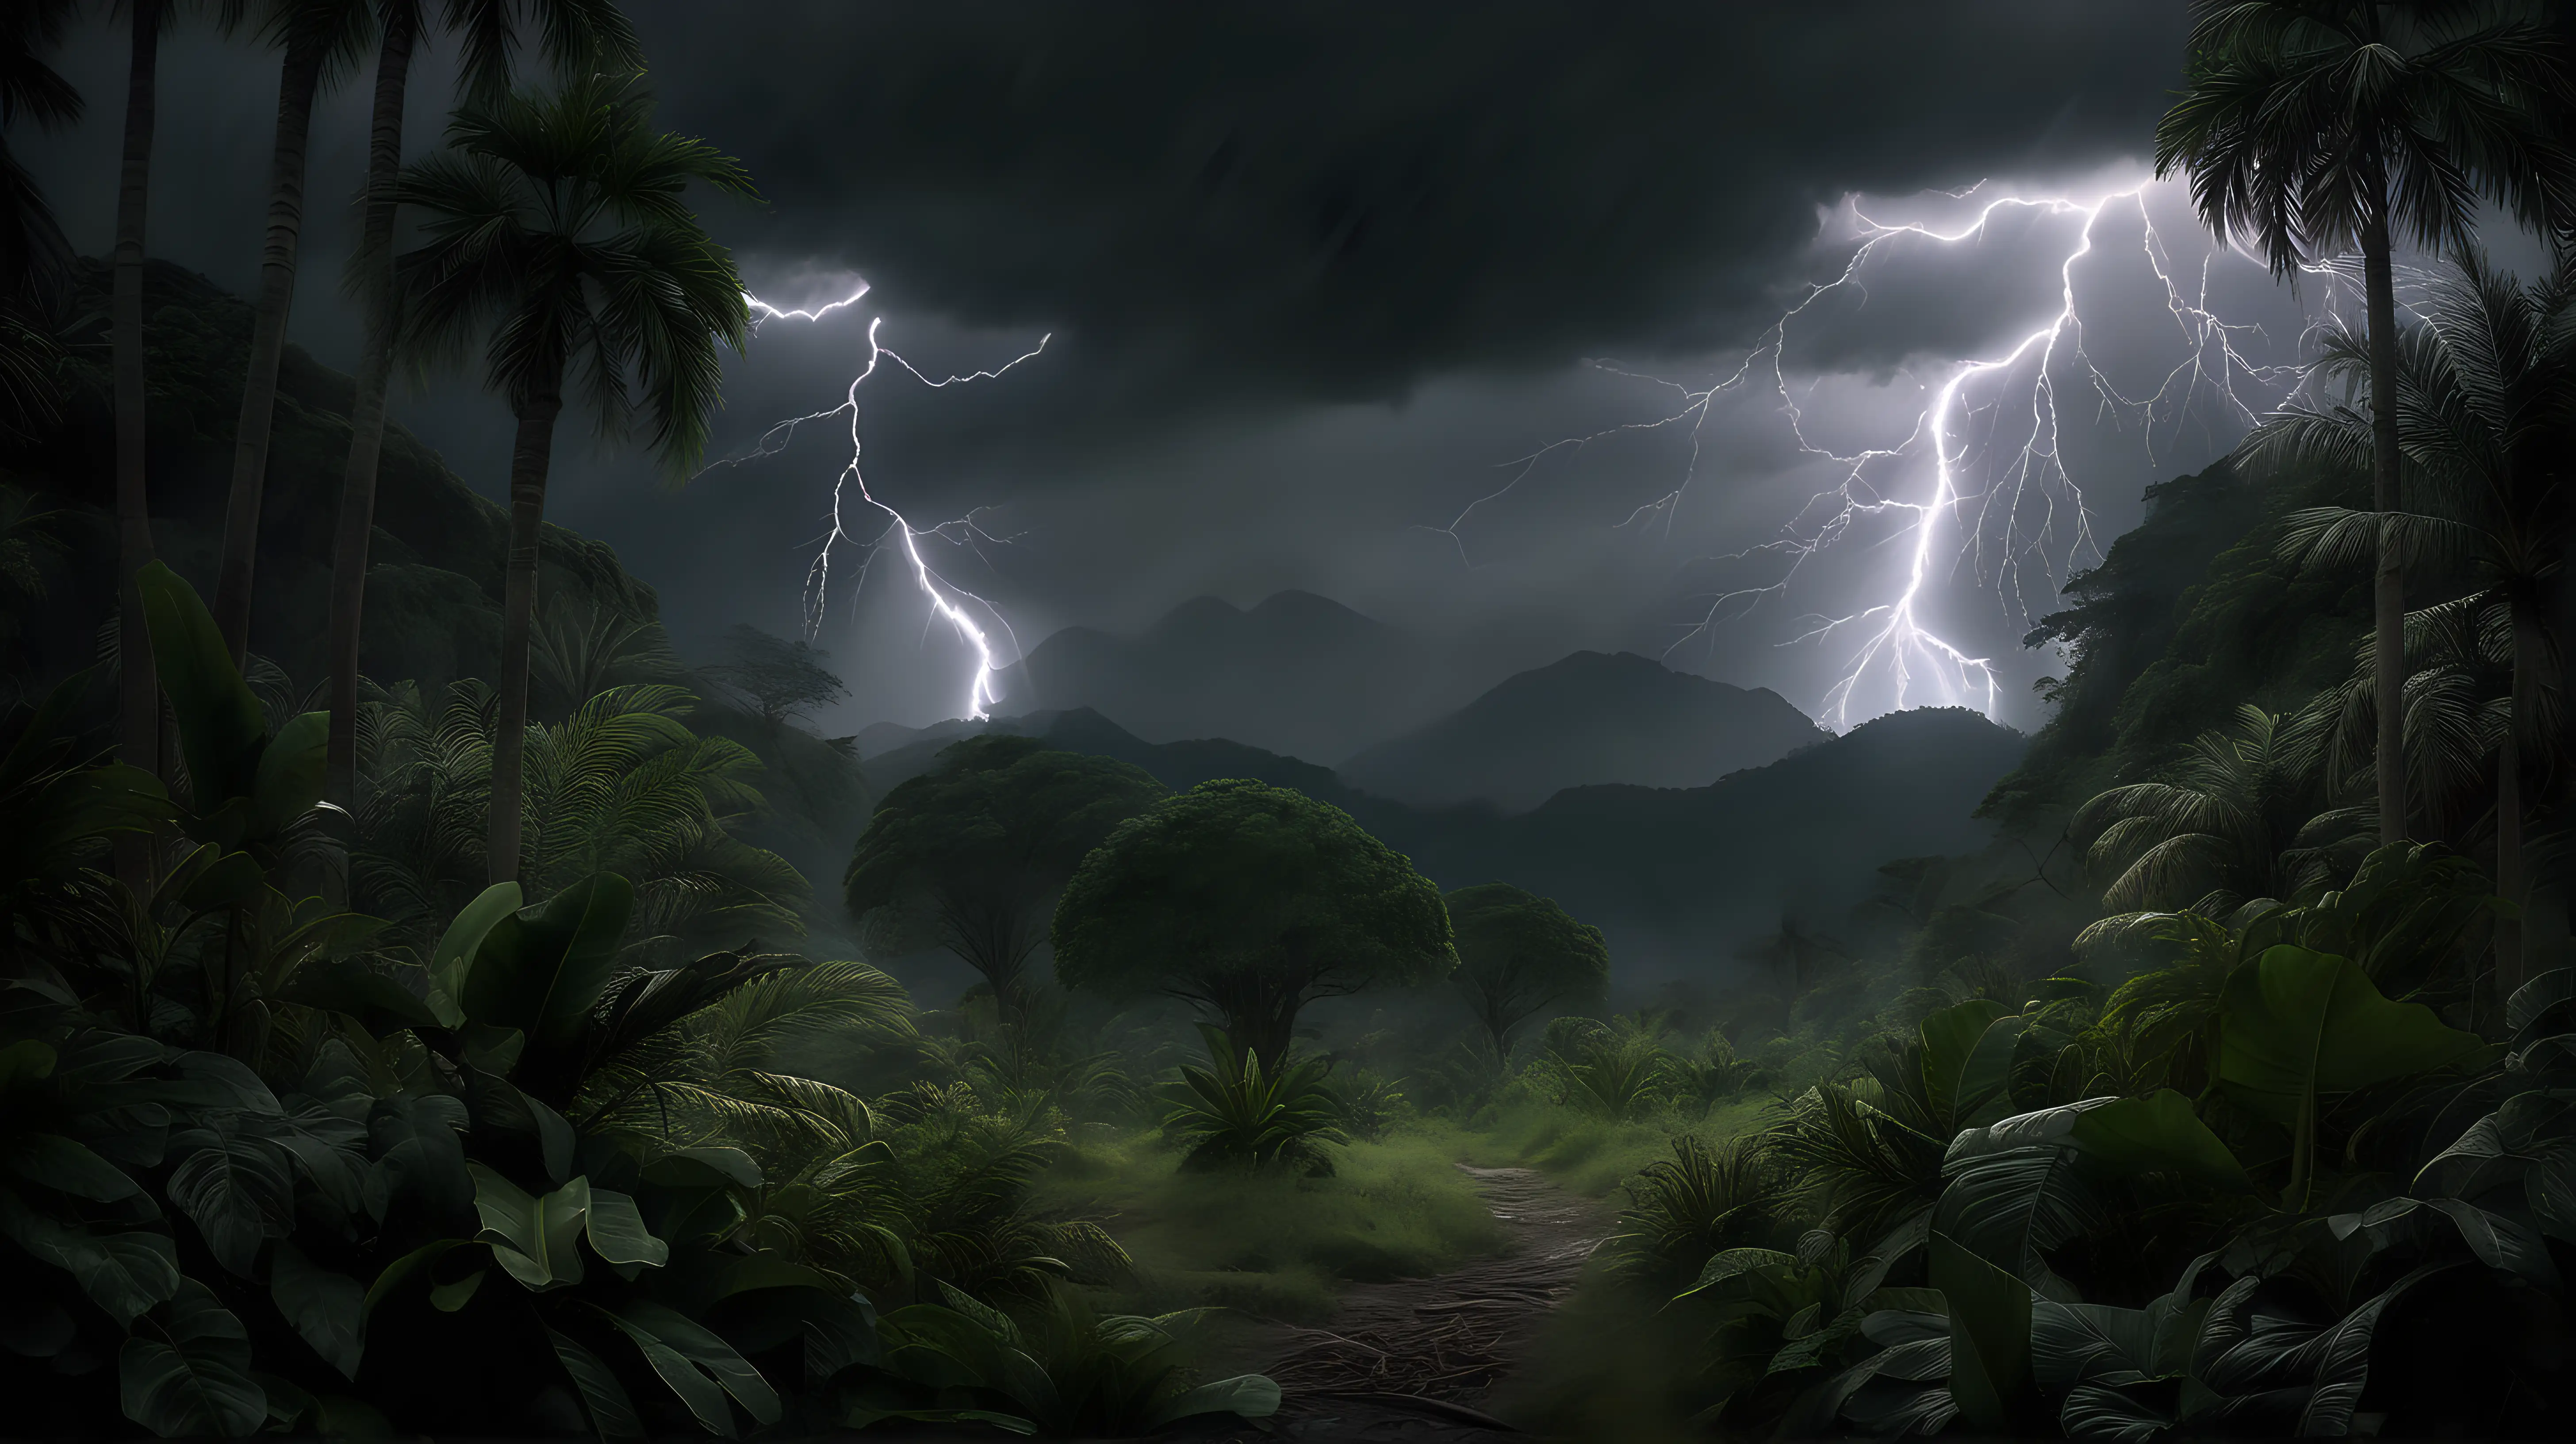 Eerie Digital Jungle Scene with Dramatic Lightning Strikes